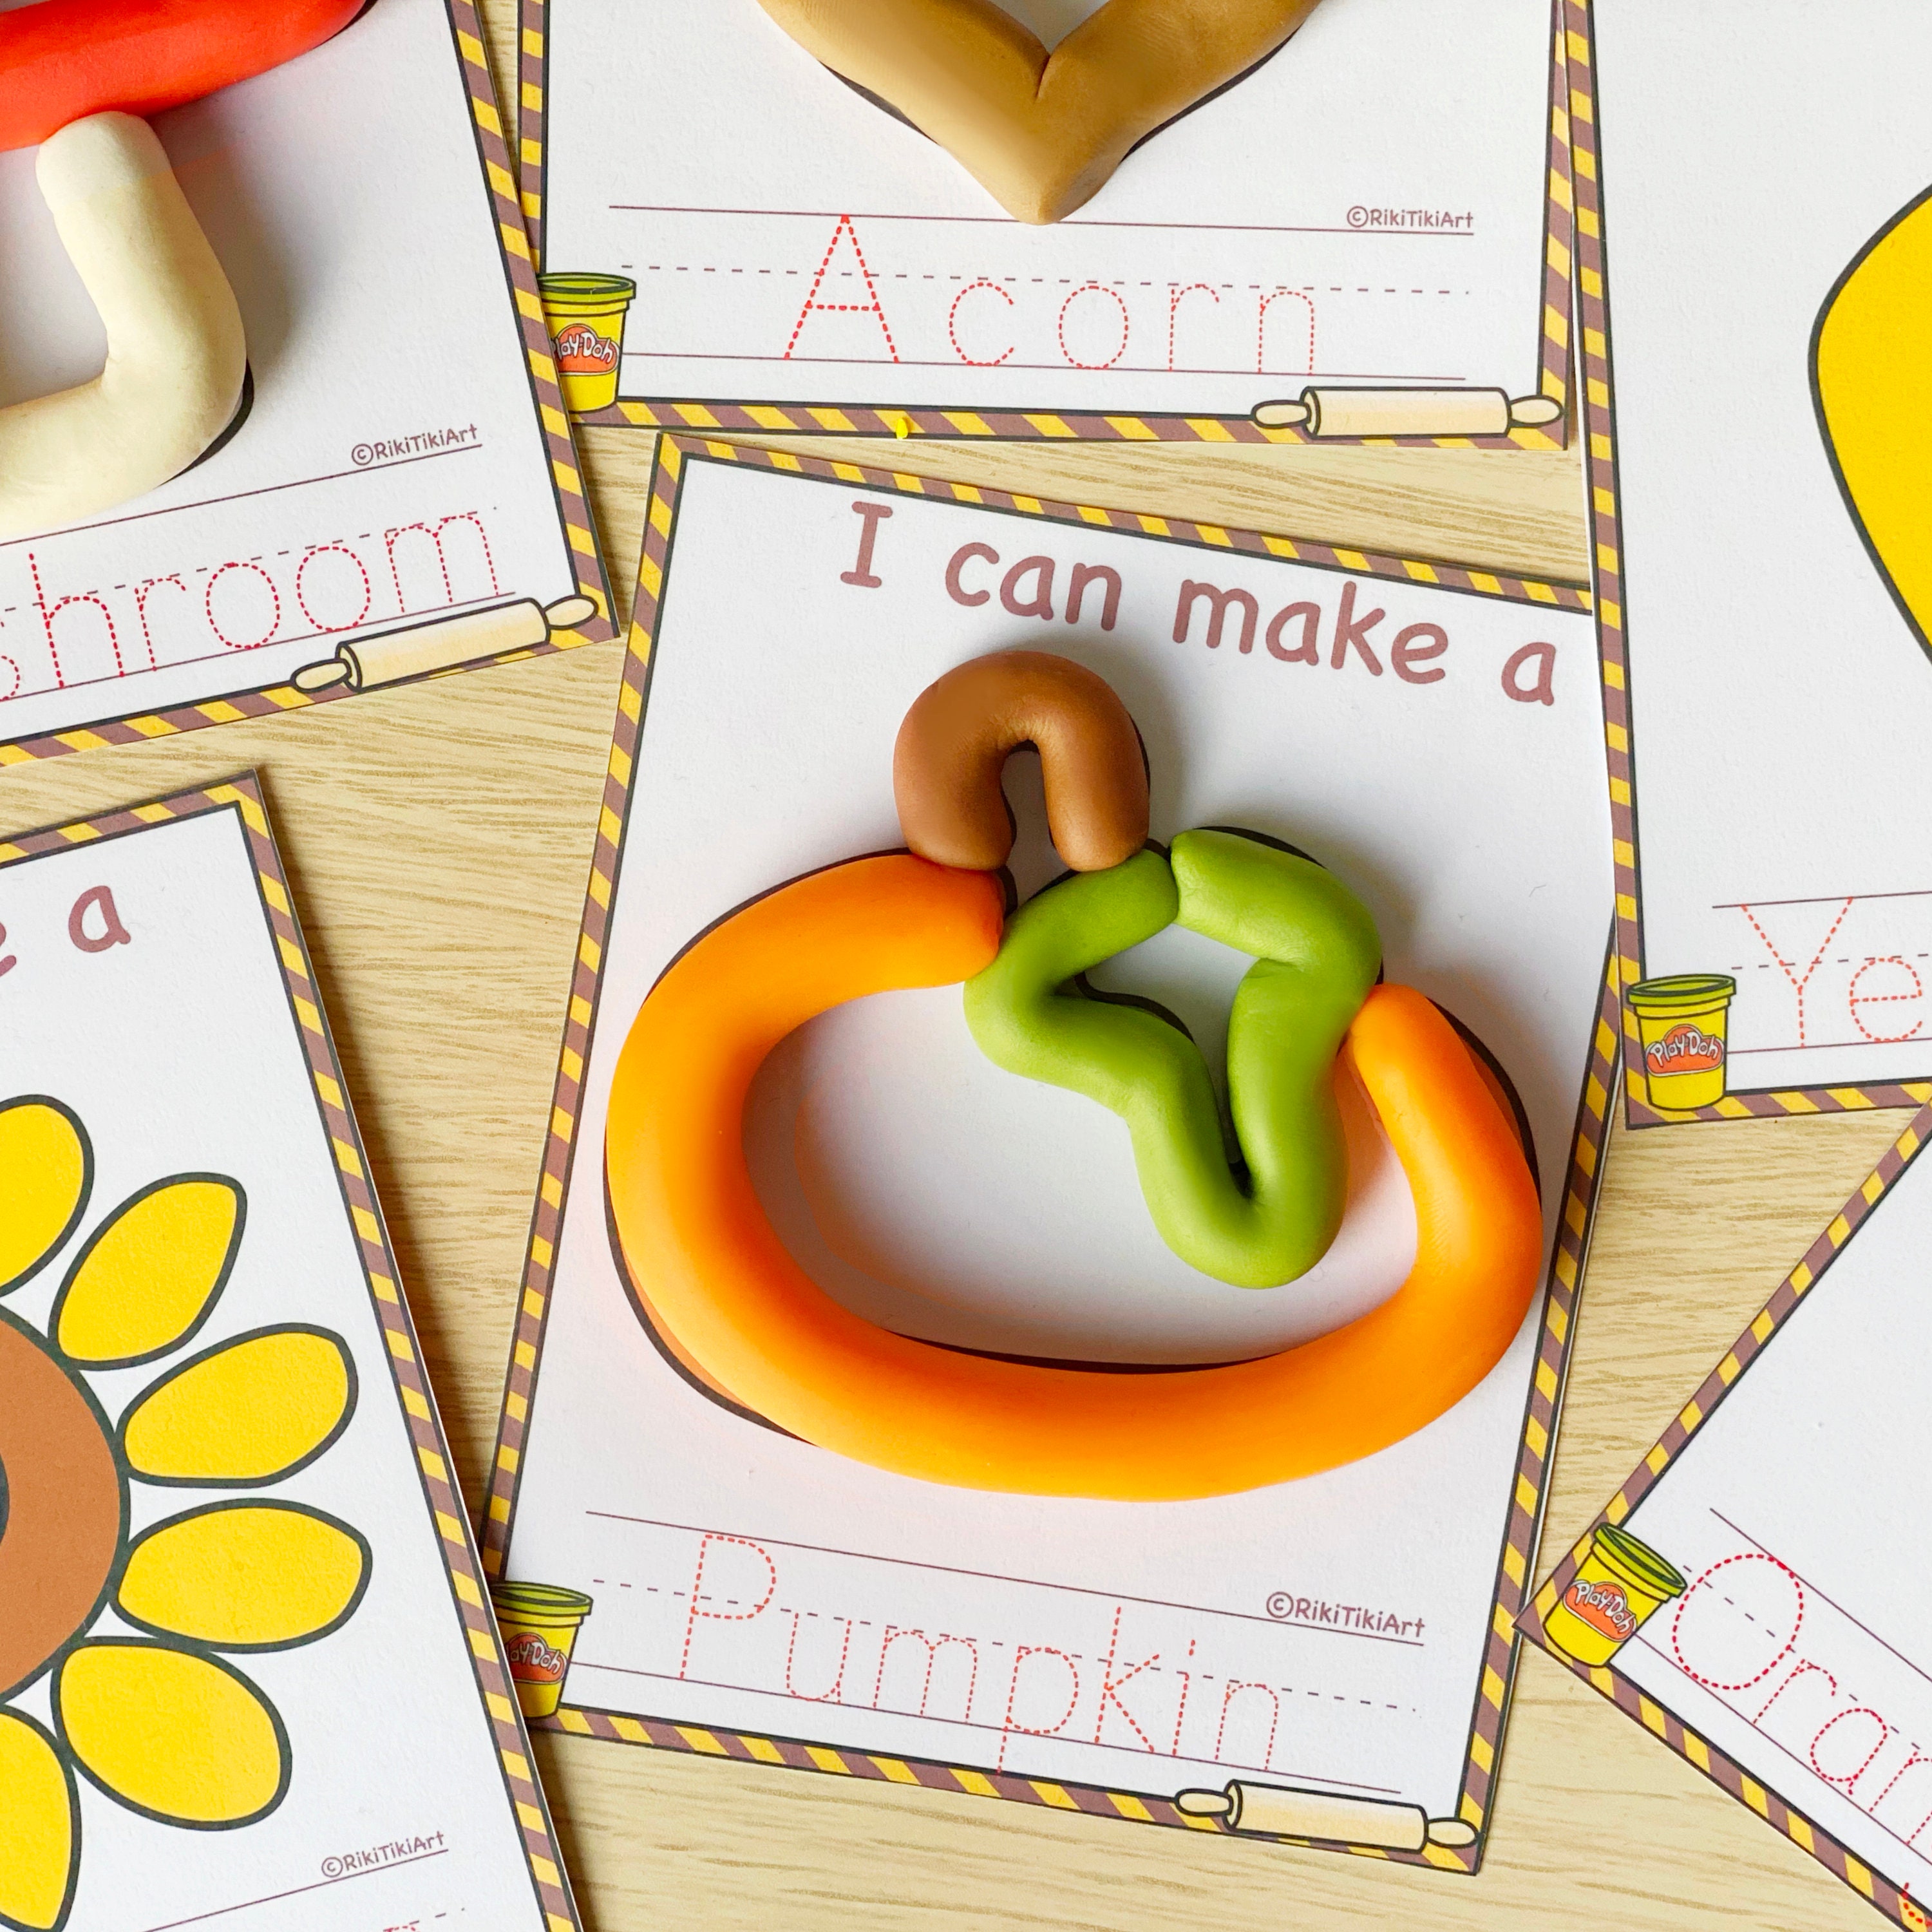 Fall Playdough Mats (Free Printable) – The Art Kit